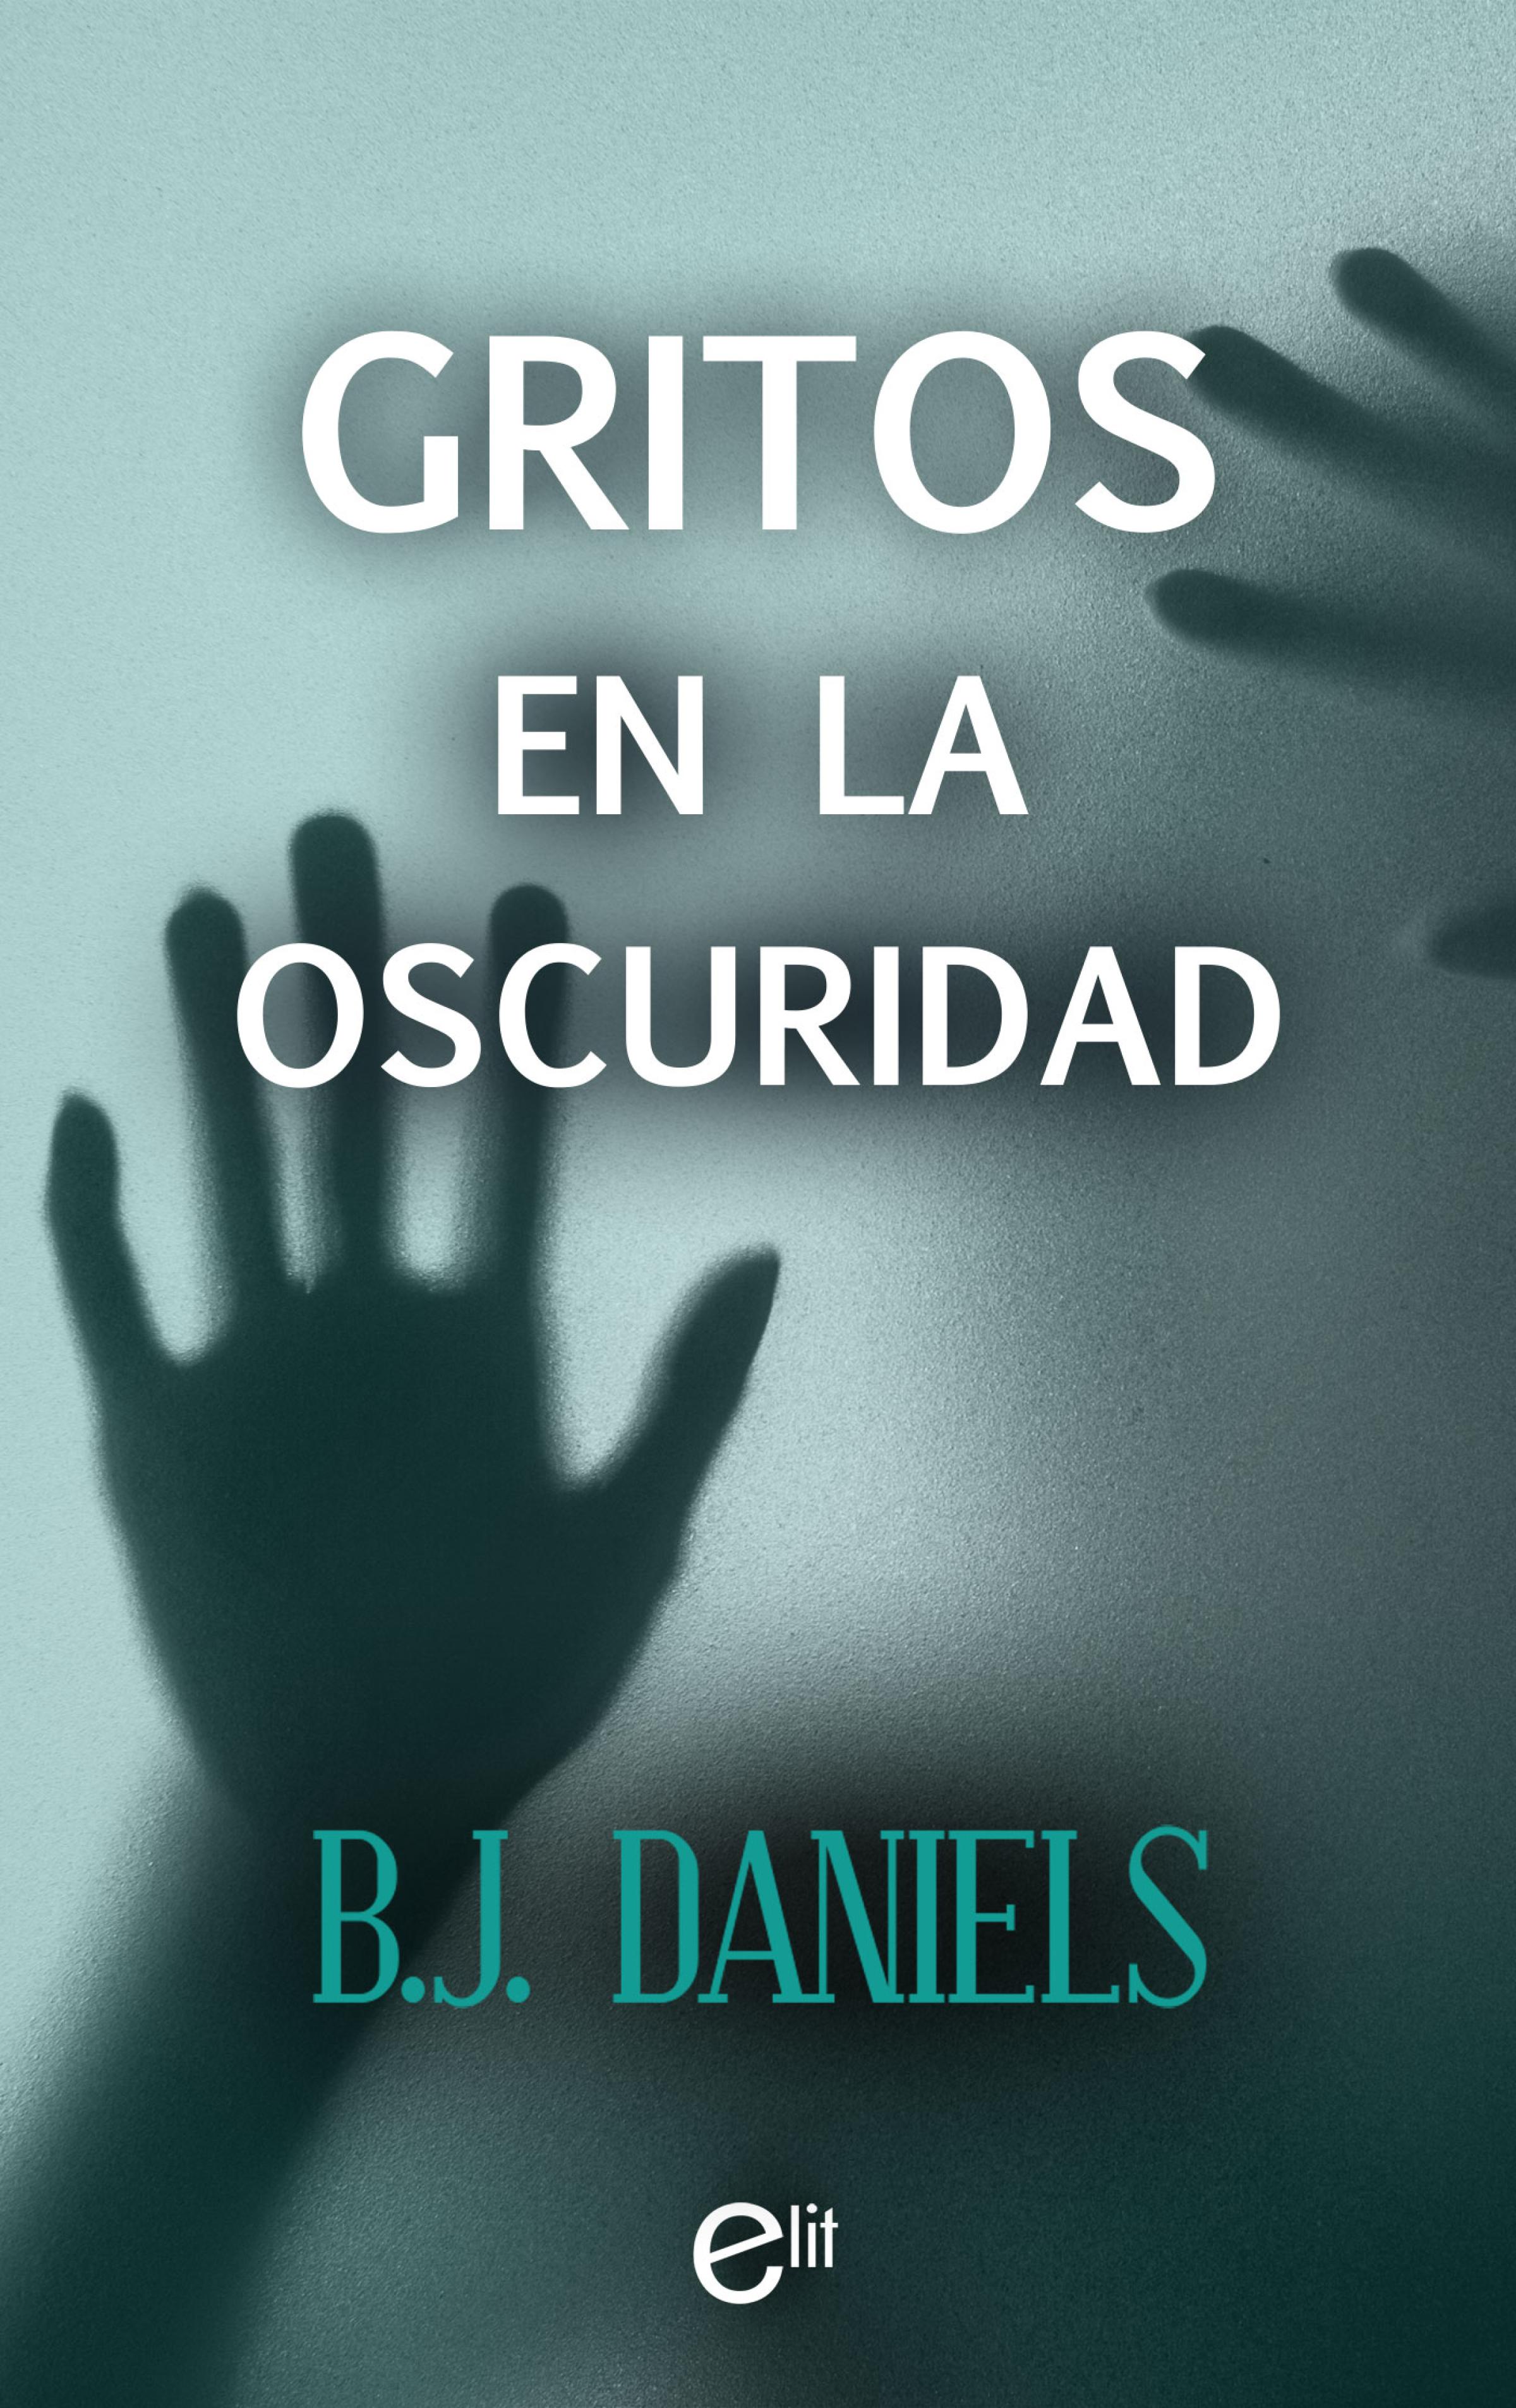 Скачать Gritos en la oscuridad - B.J. Daniels